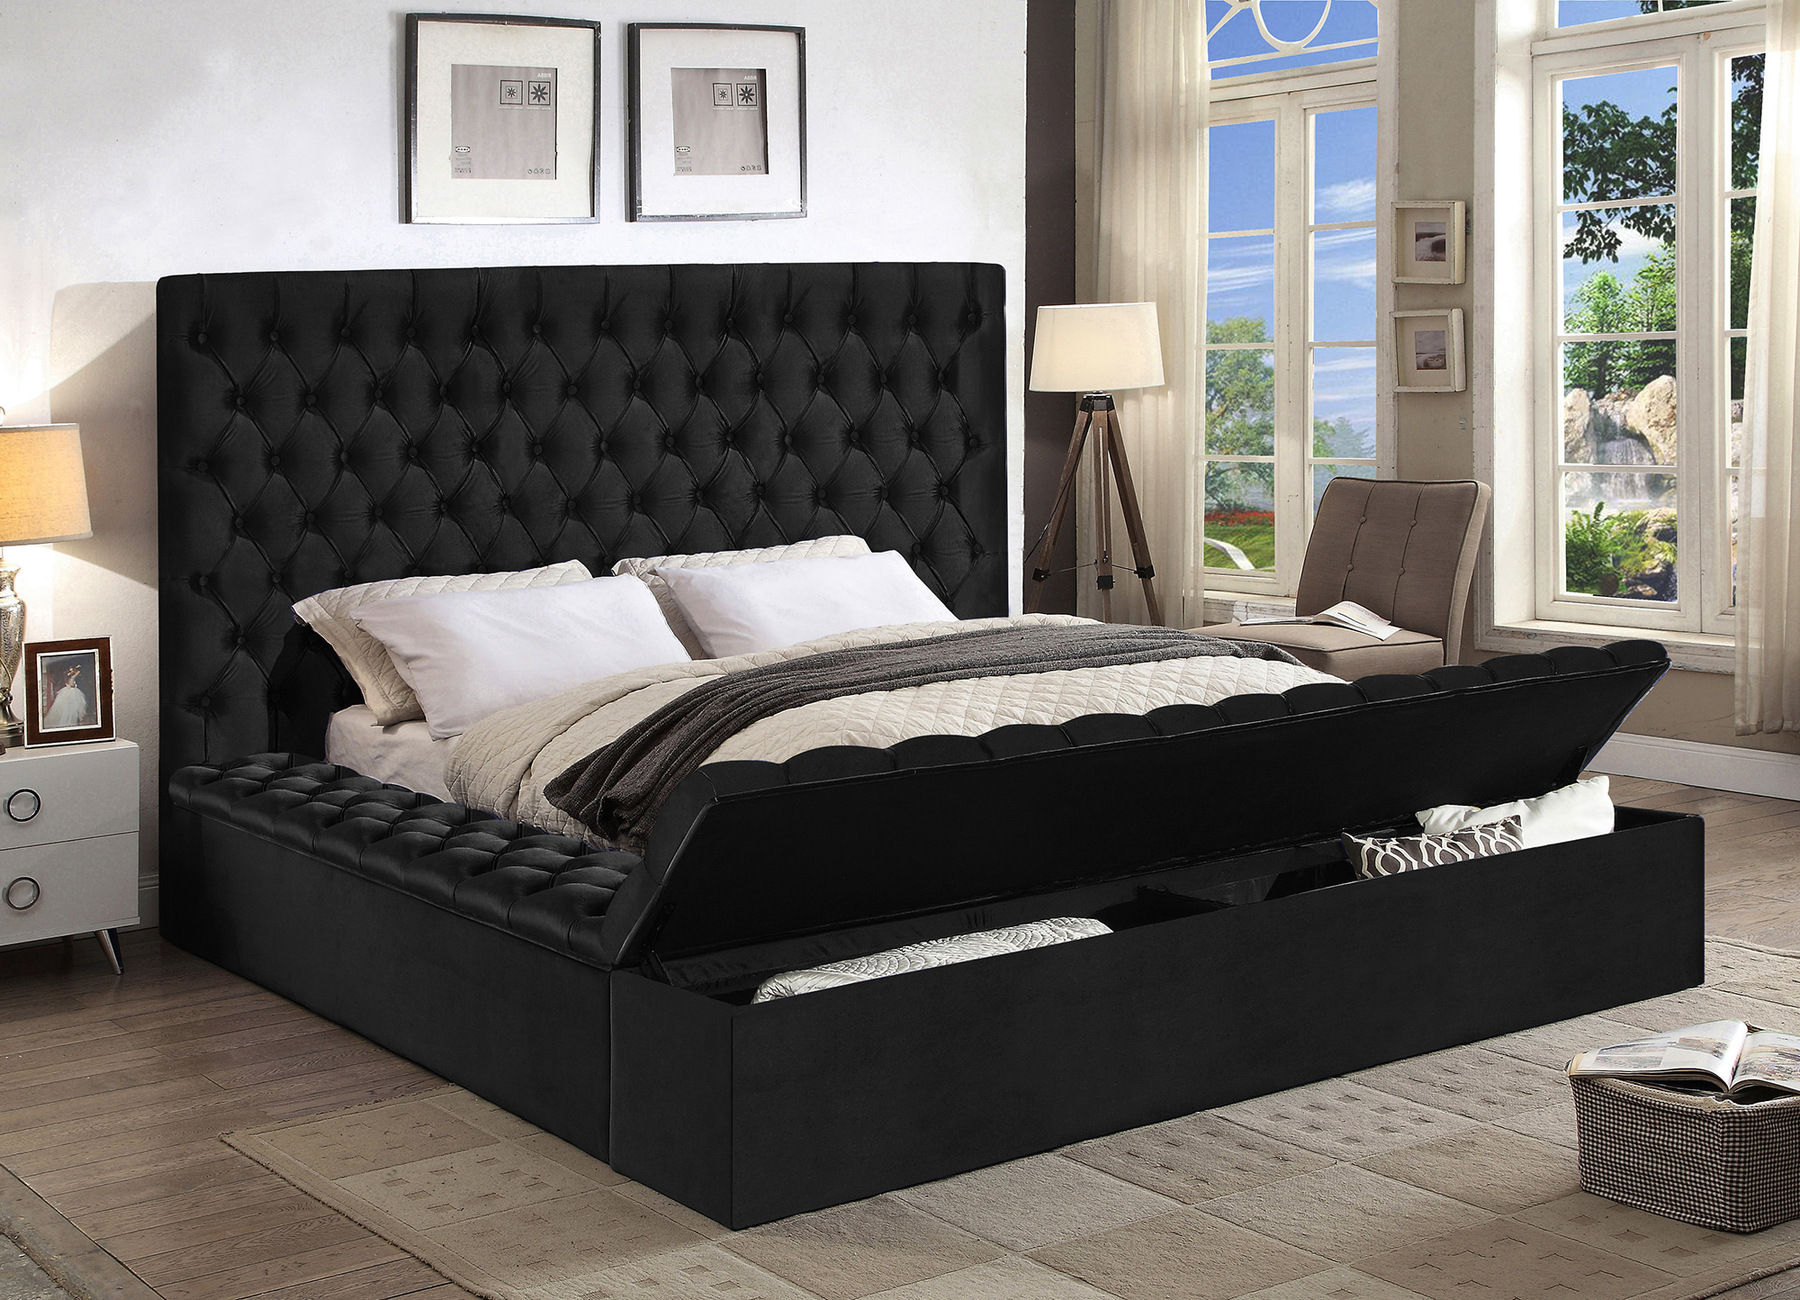 Bliss Black King Size Bed Bliss Meridian Furniture King Size Beds Comfyco Furniture